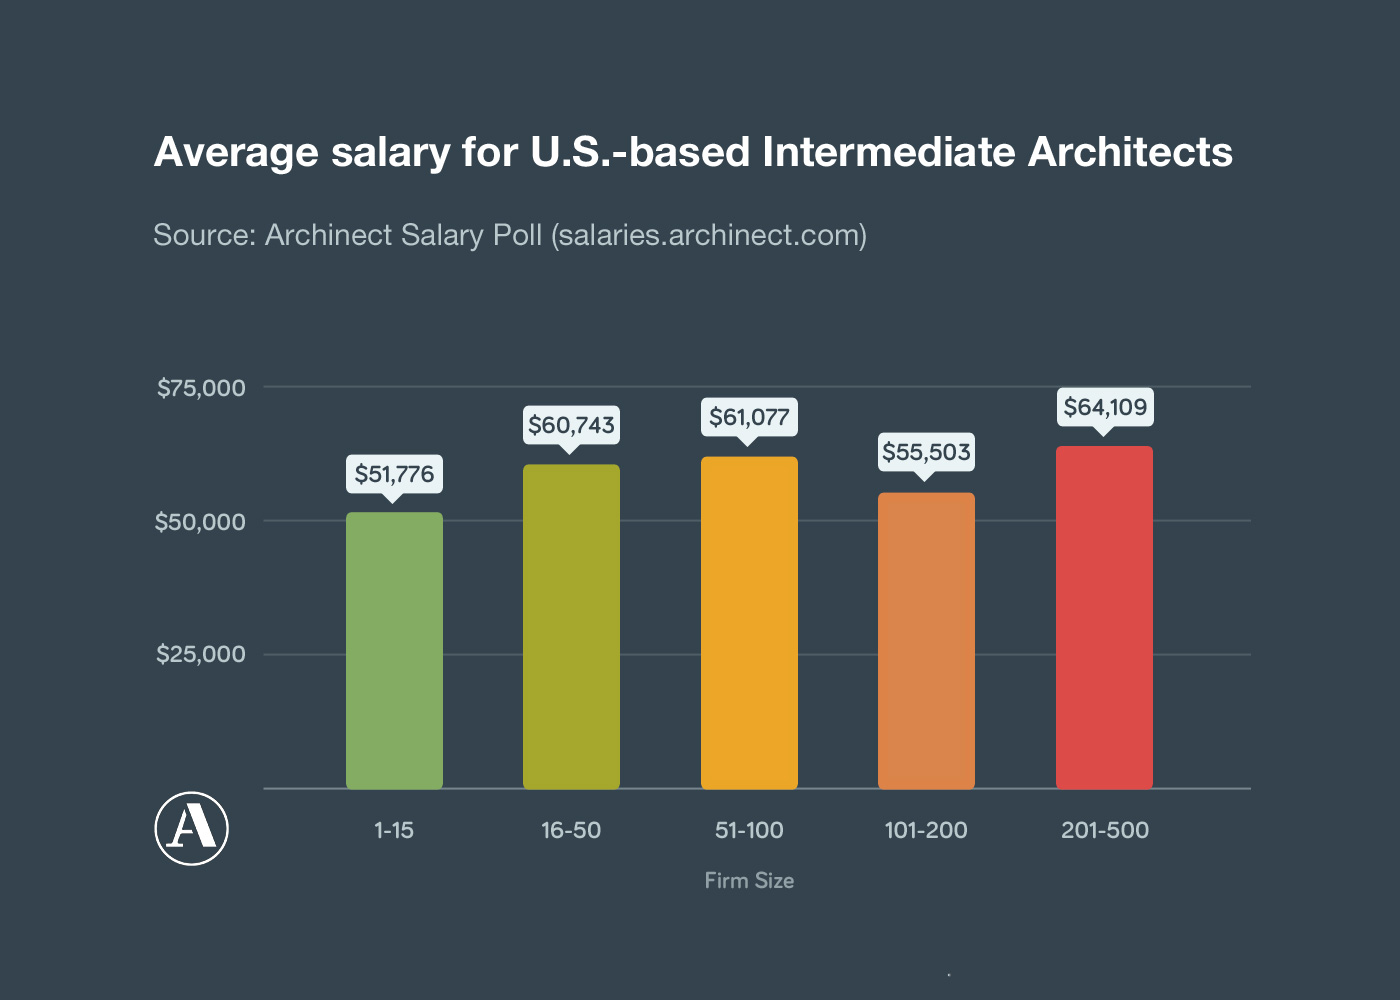 enterprise data architect salaries